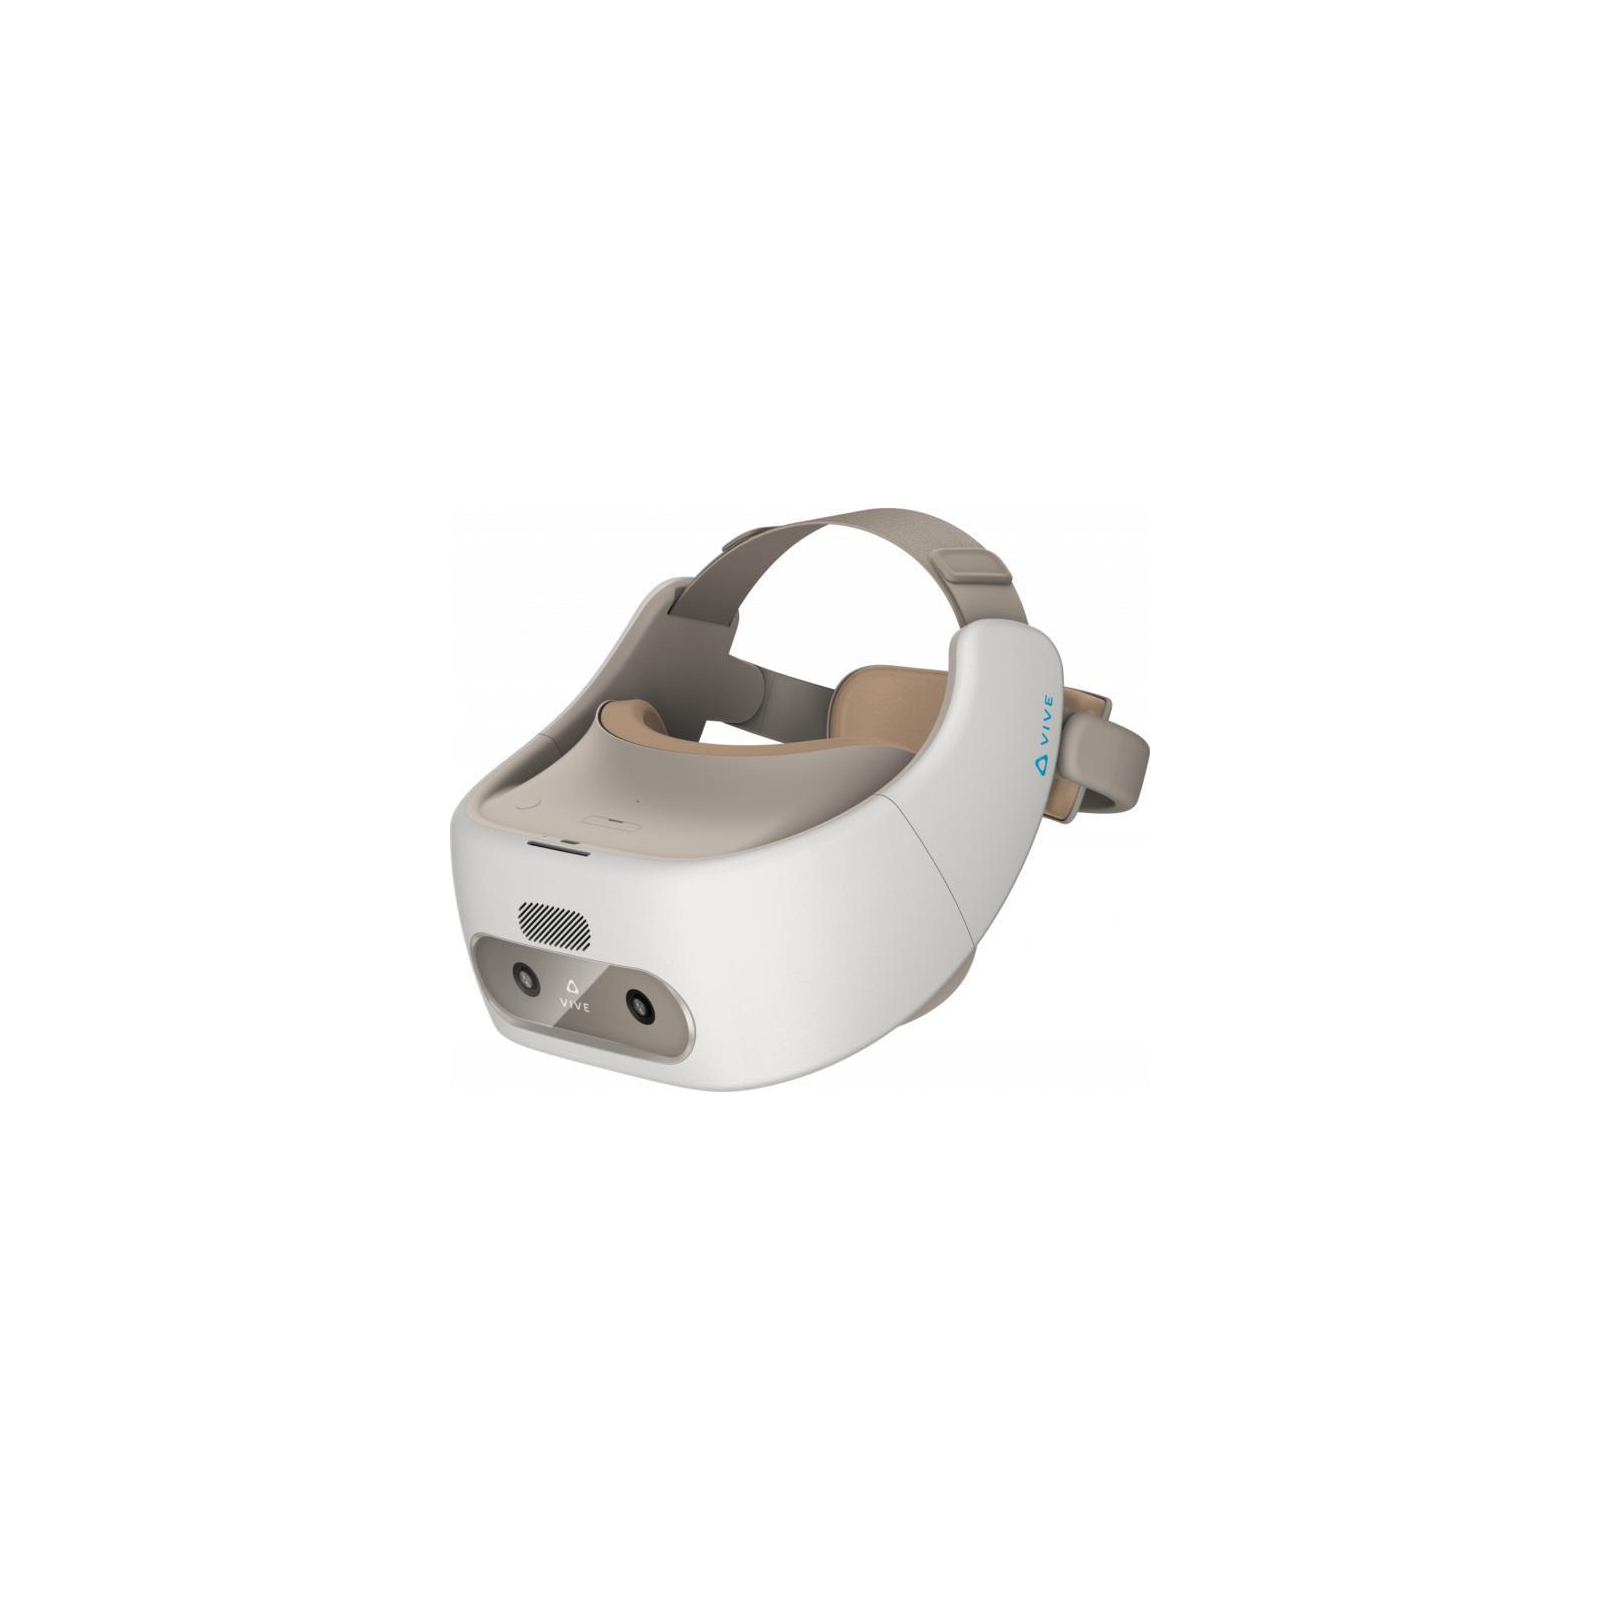 Очки виртуальной реальности HTC VIVE FOCUS White (99HANV018-00)